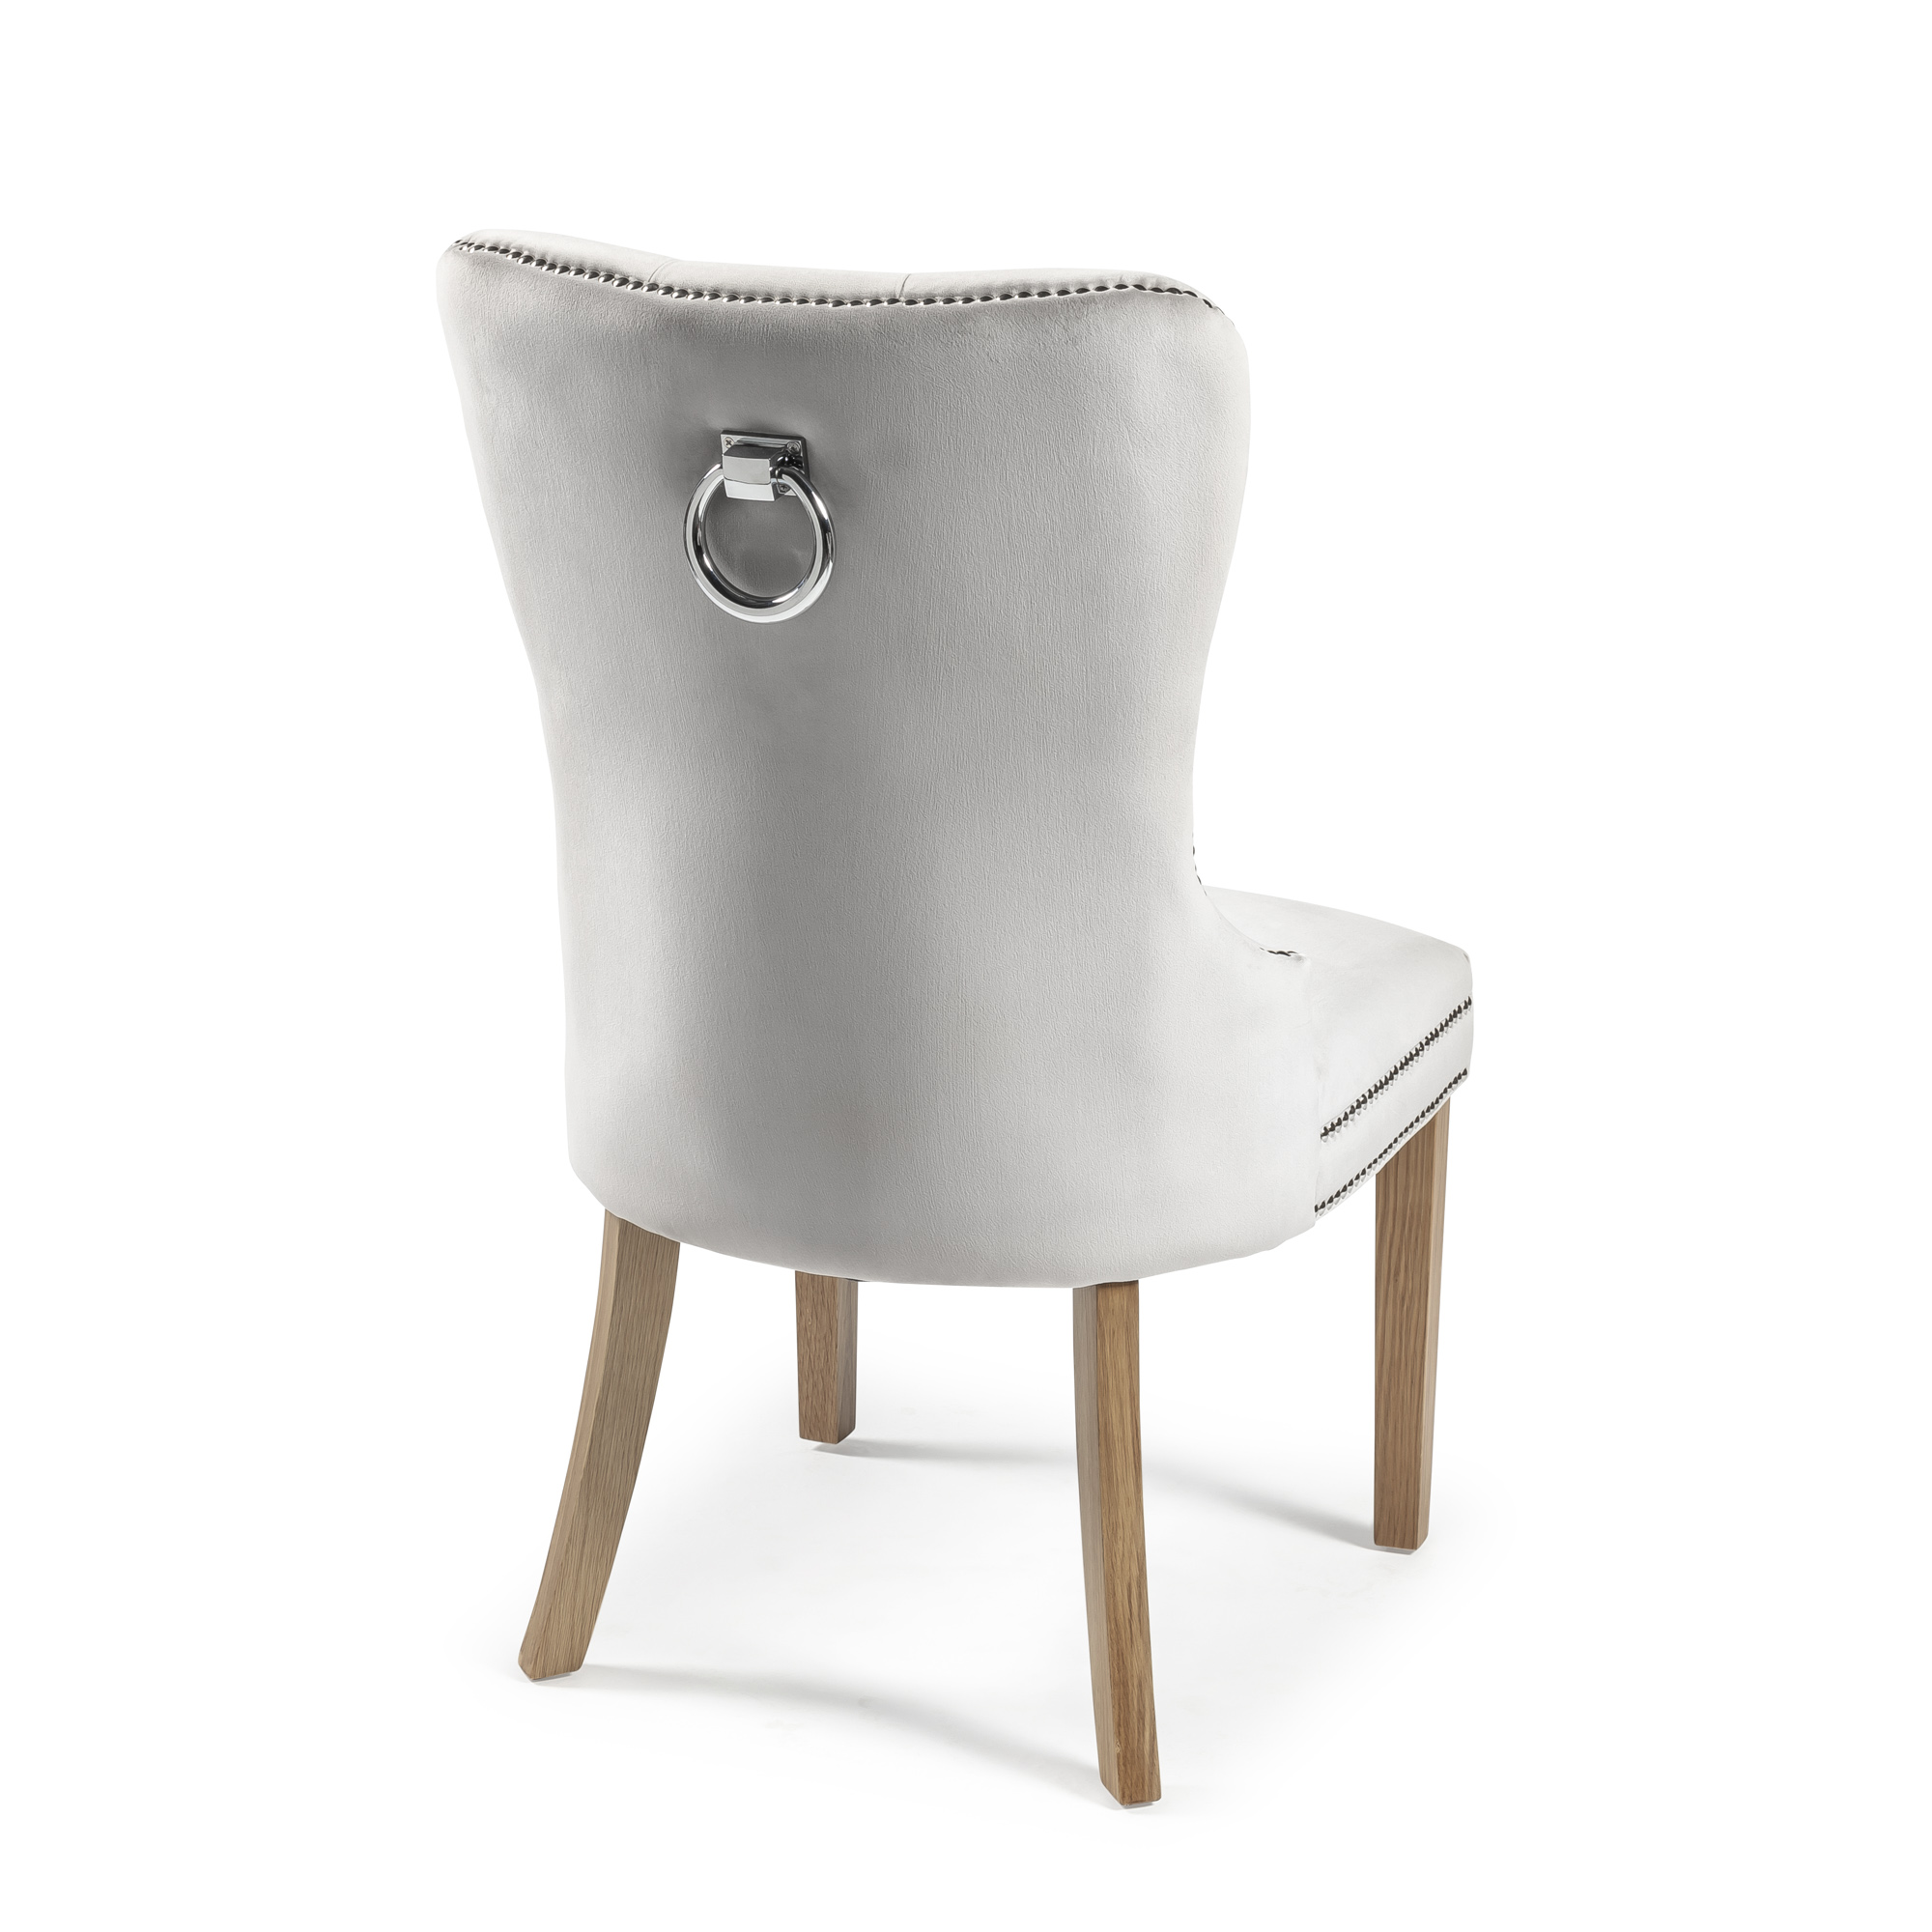 Hale Light Grey Brushed Velvet Dining Chair with Hoop Handle – Oak Legs